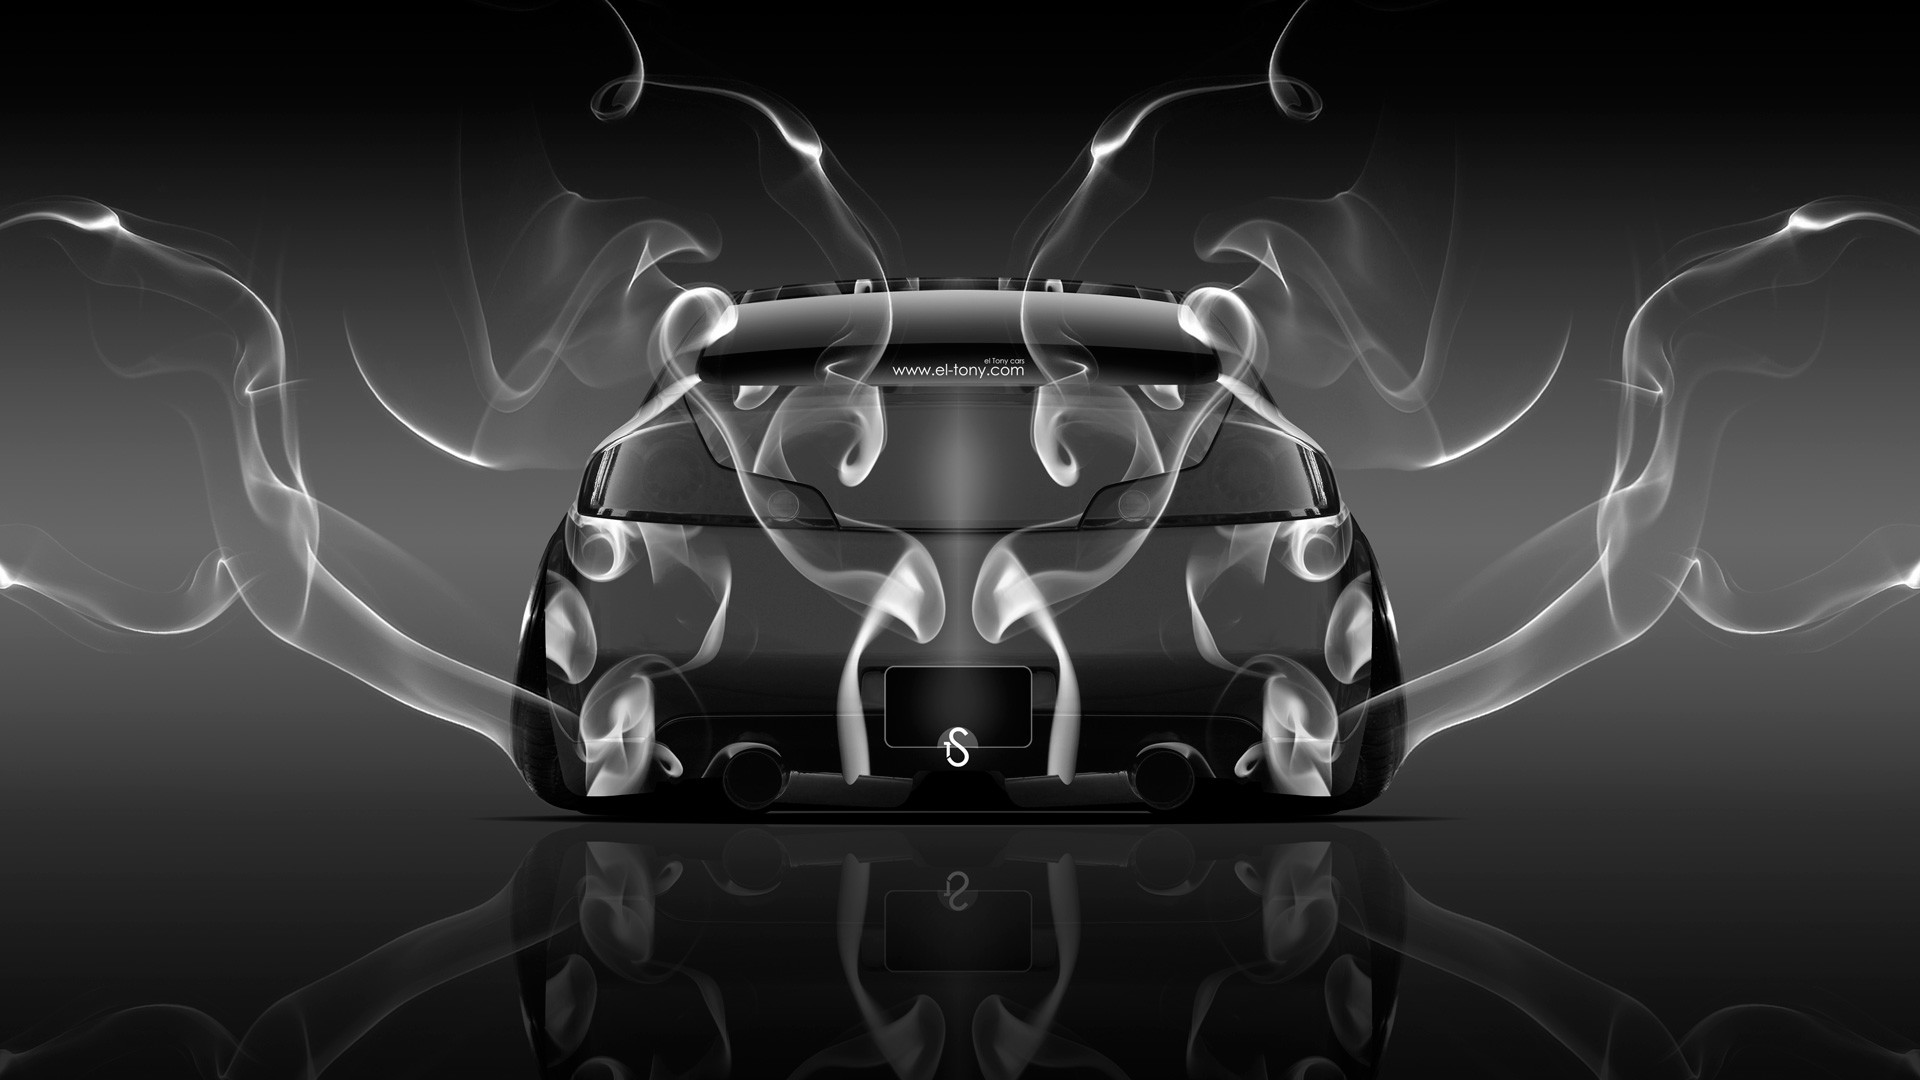 1920x1080 Infiniti-G37-Back-Smoke-Car-2014-HD-Wallpapers-